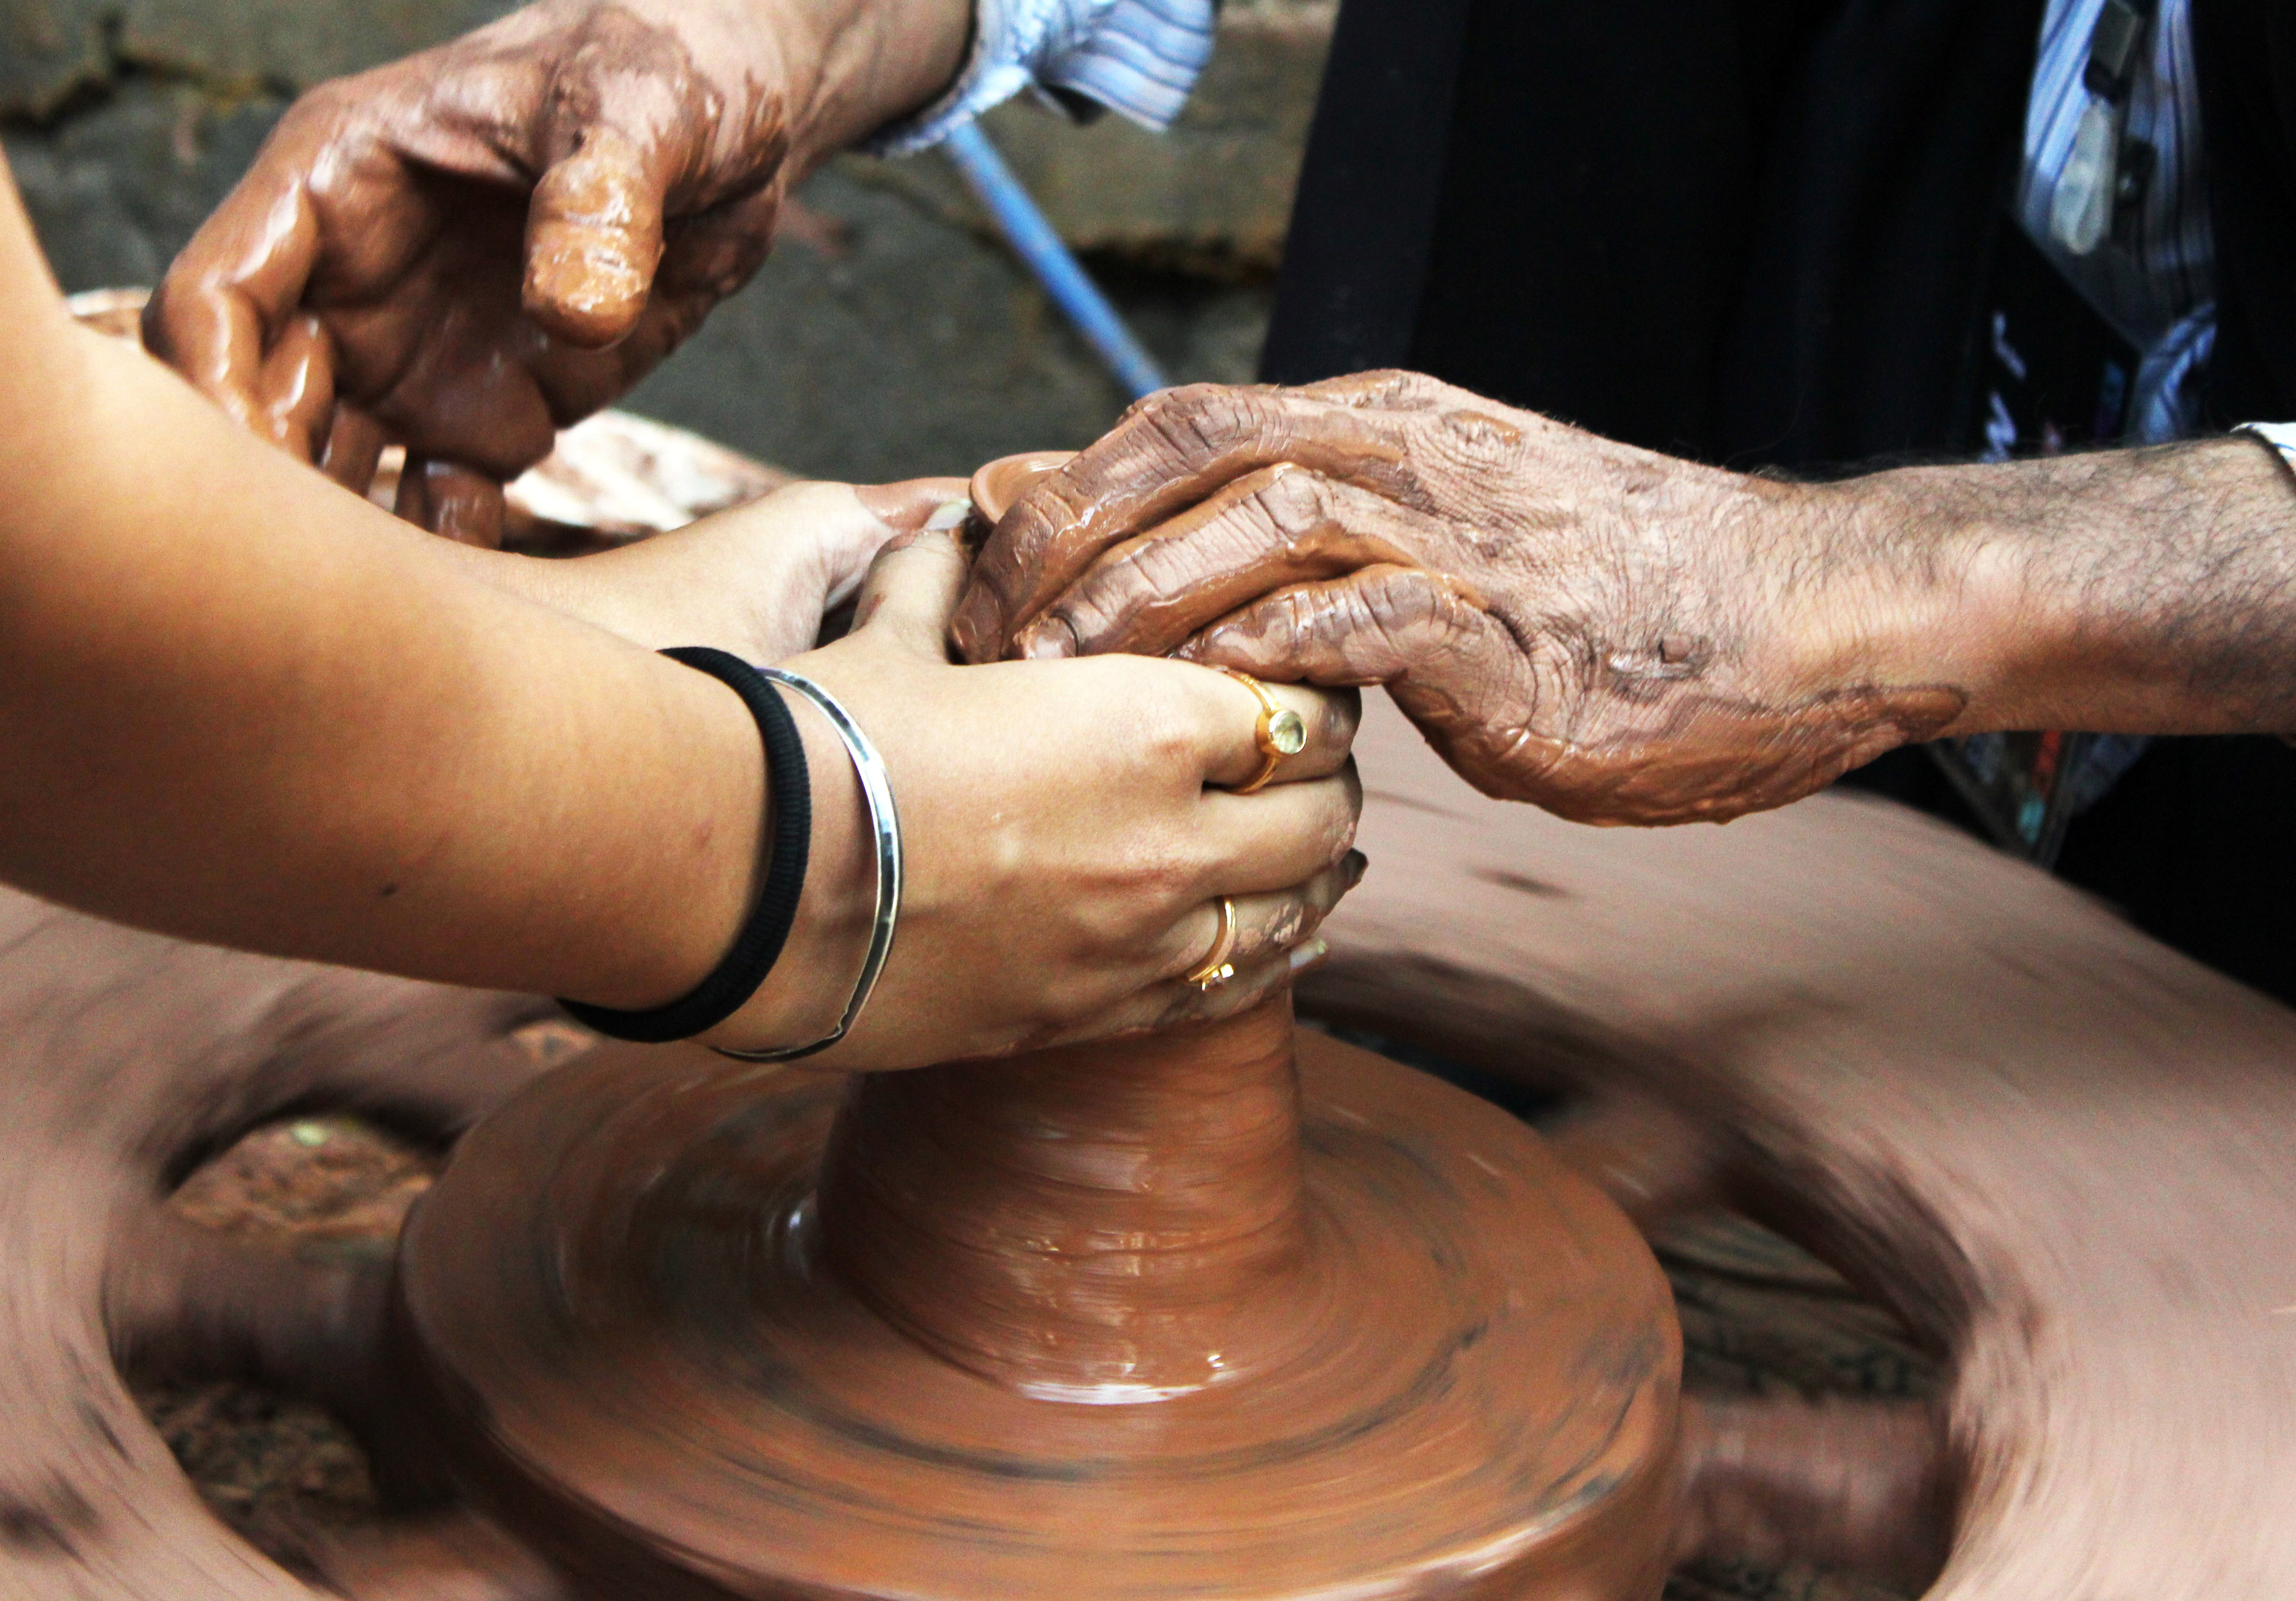 Hands Making Pottery image - Free stock photo - Public Domain photo ...